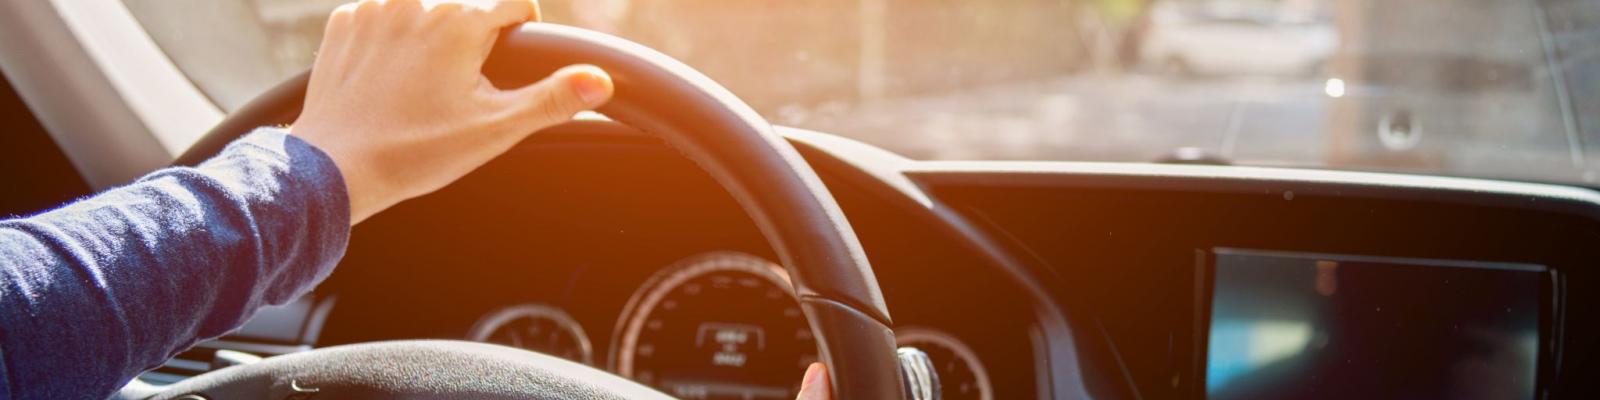 Photo of hands on steering wheel